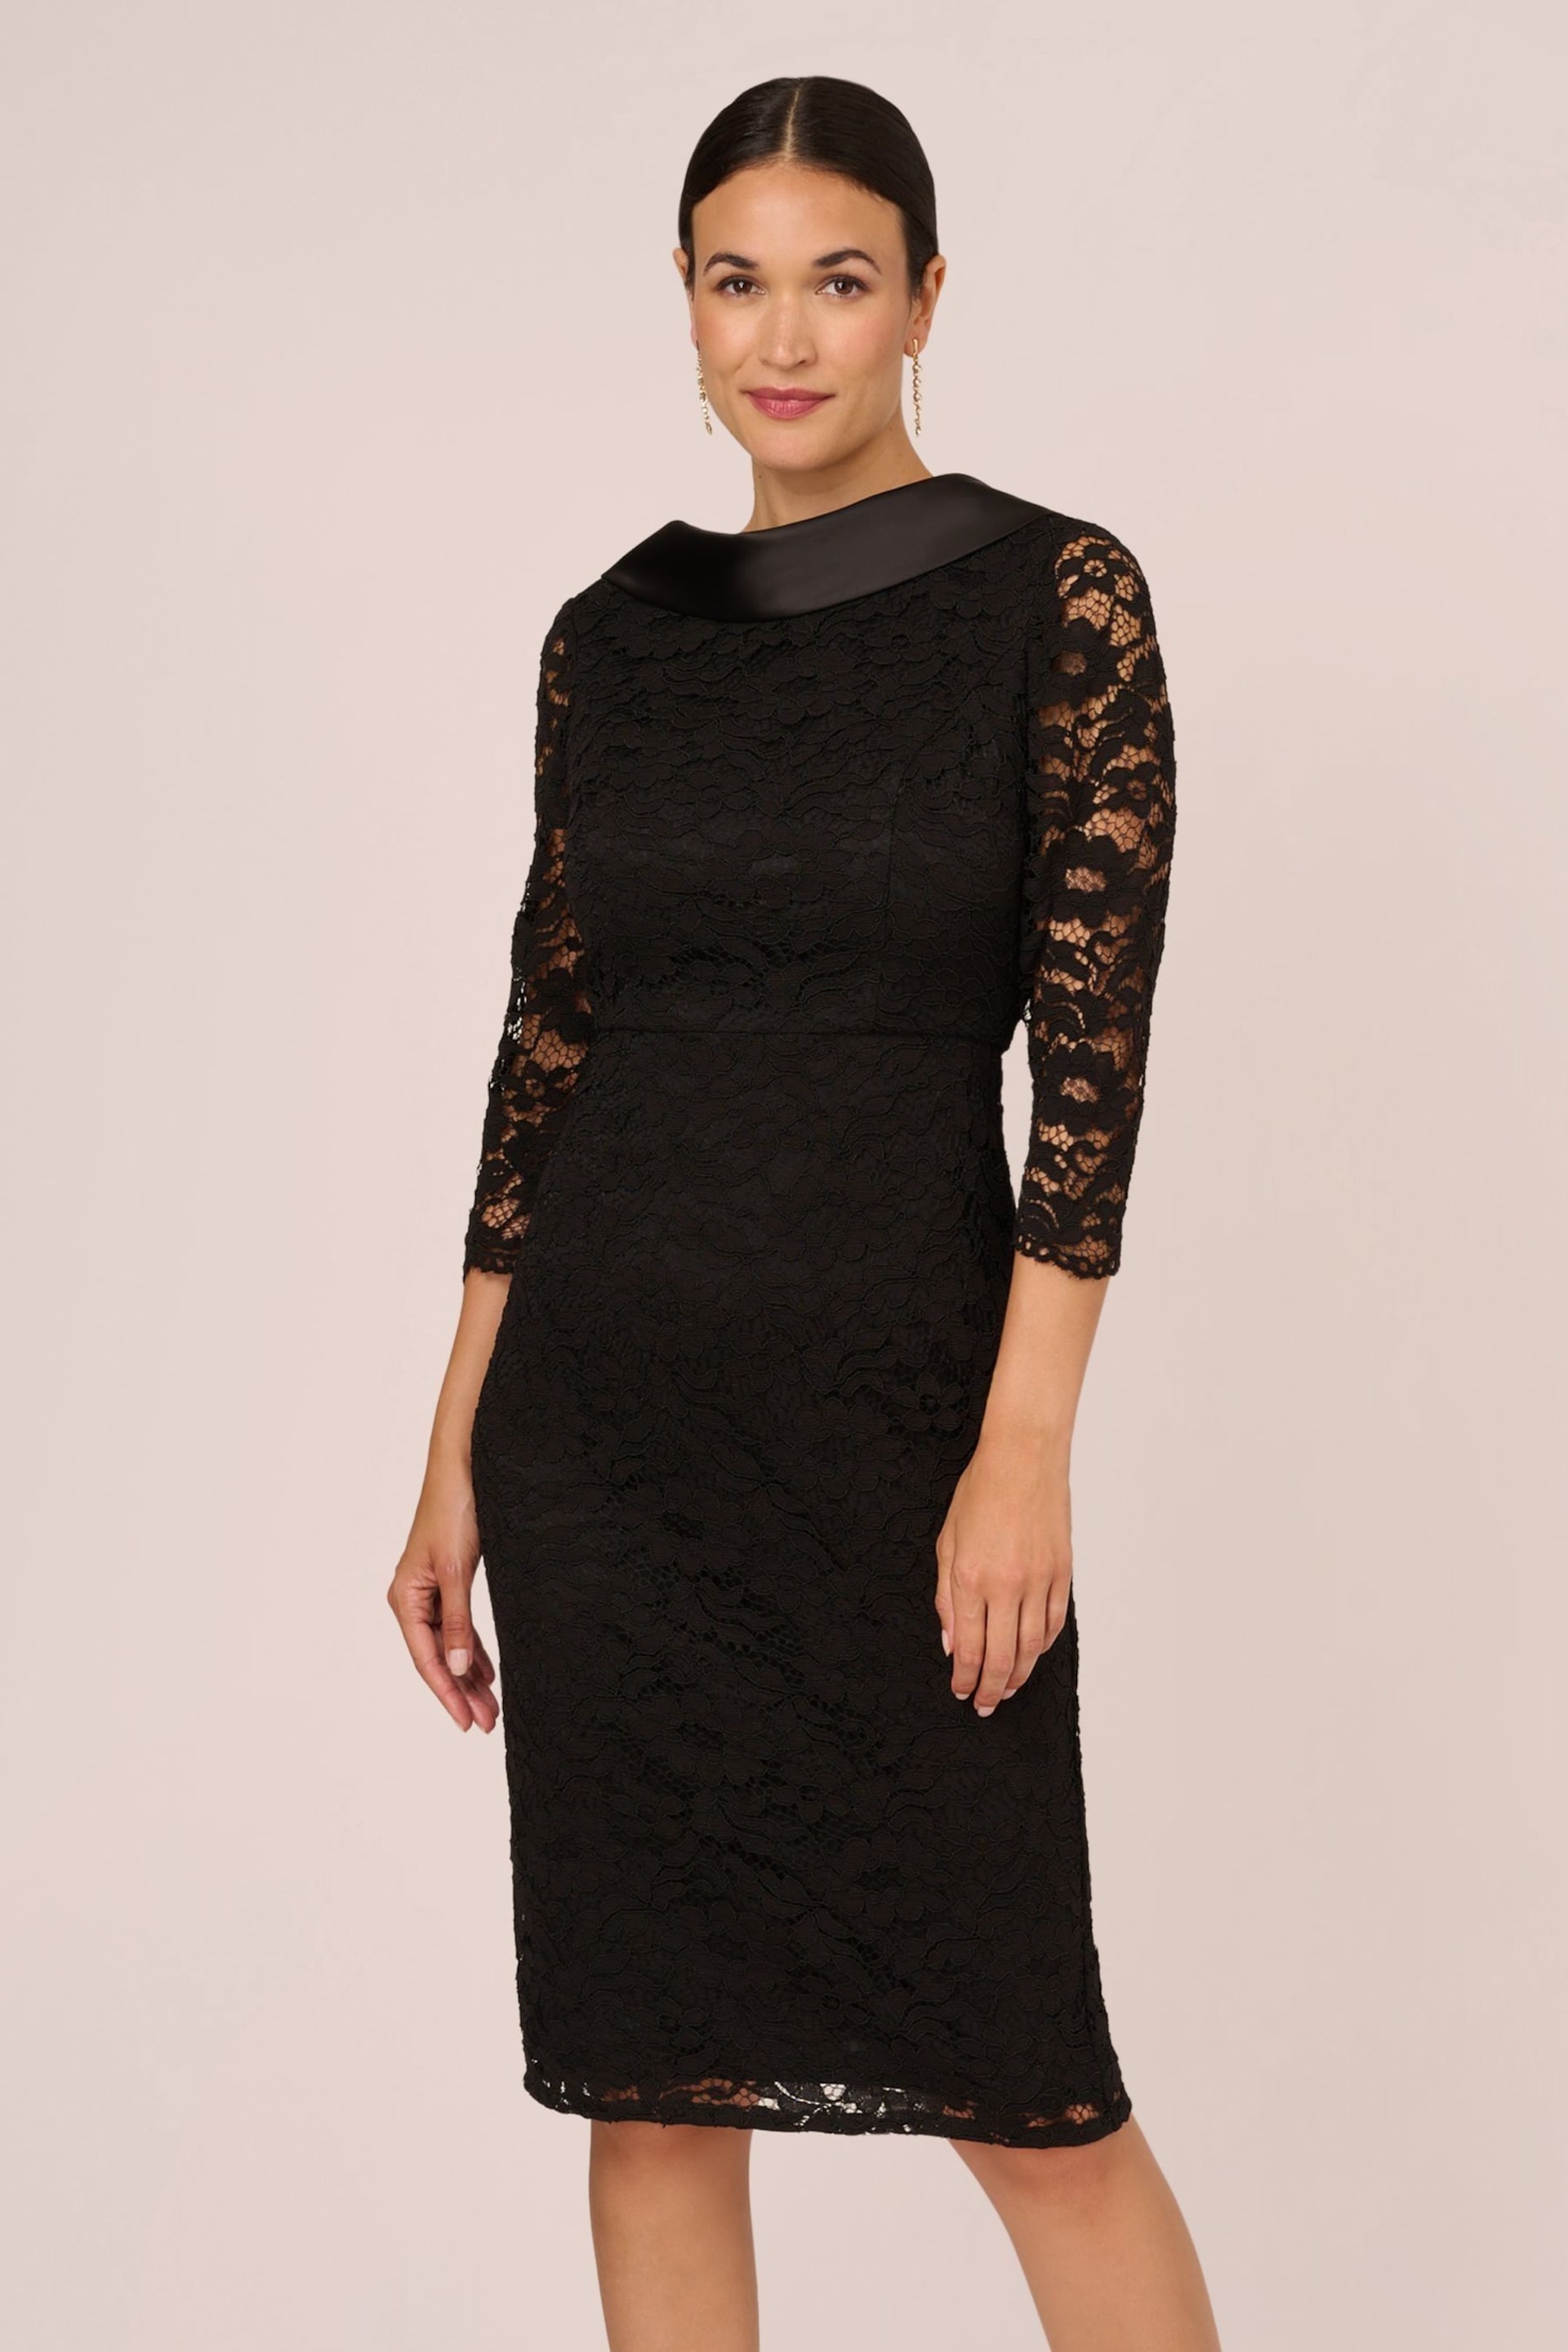 Adrianna Papell Roll Neck Sheath Black Dress - Image 1 of 7